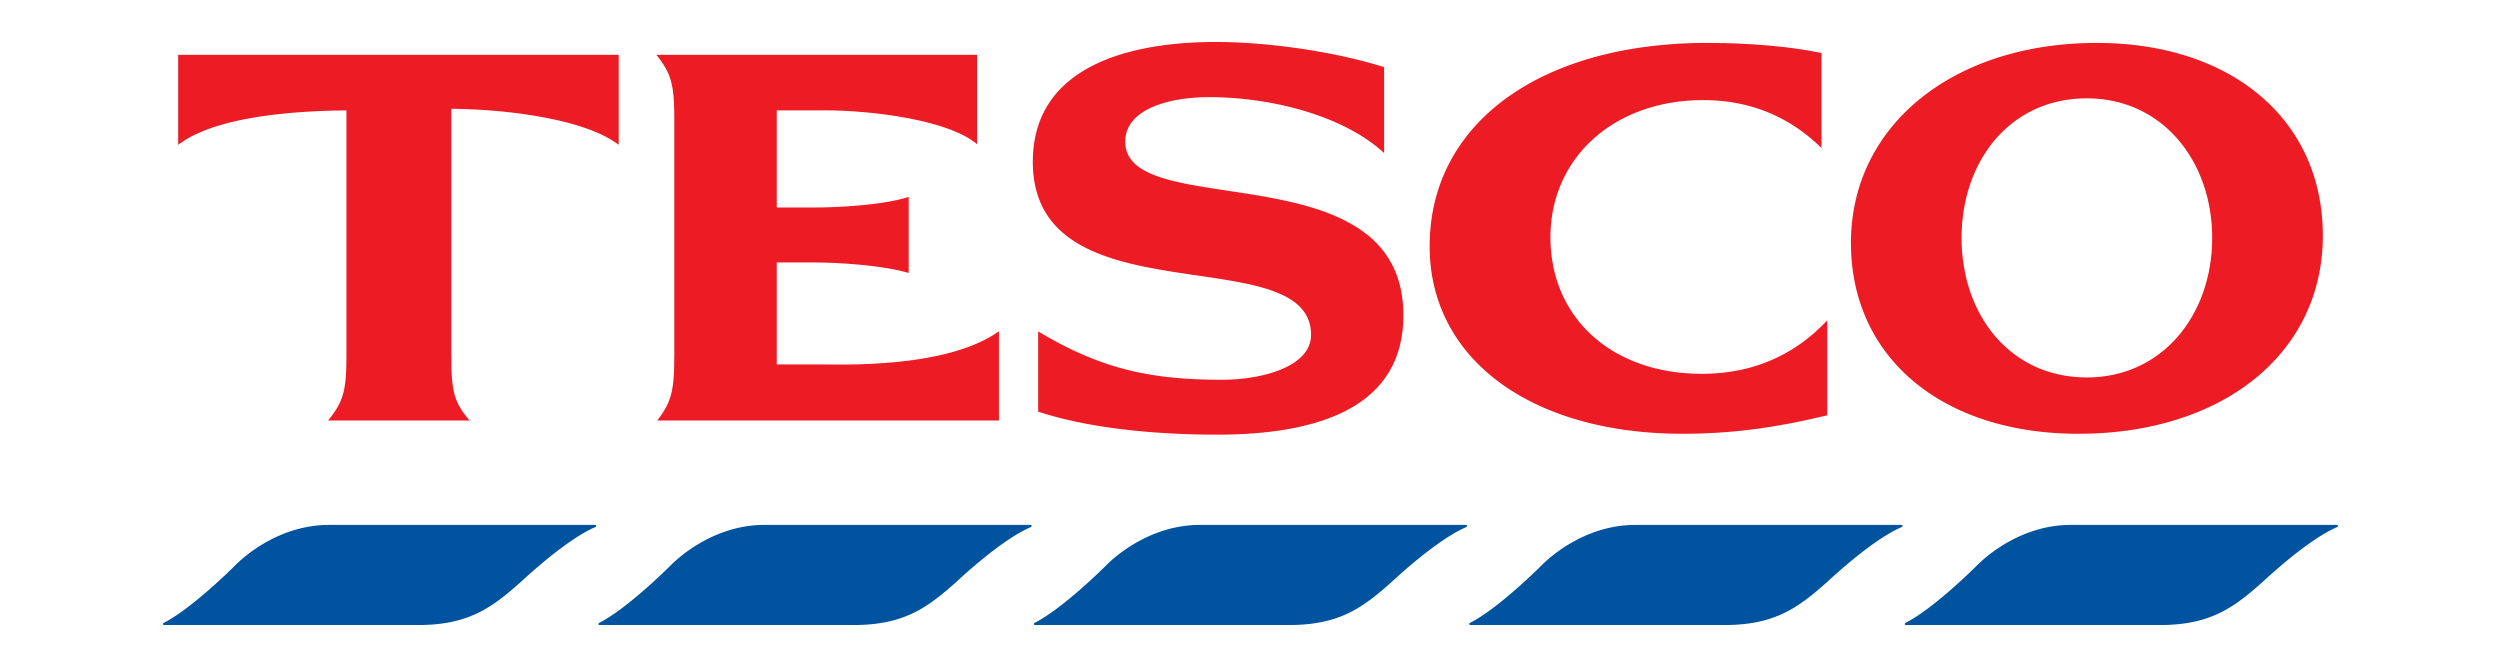 Area Logo Text Tesco Marketing PNG